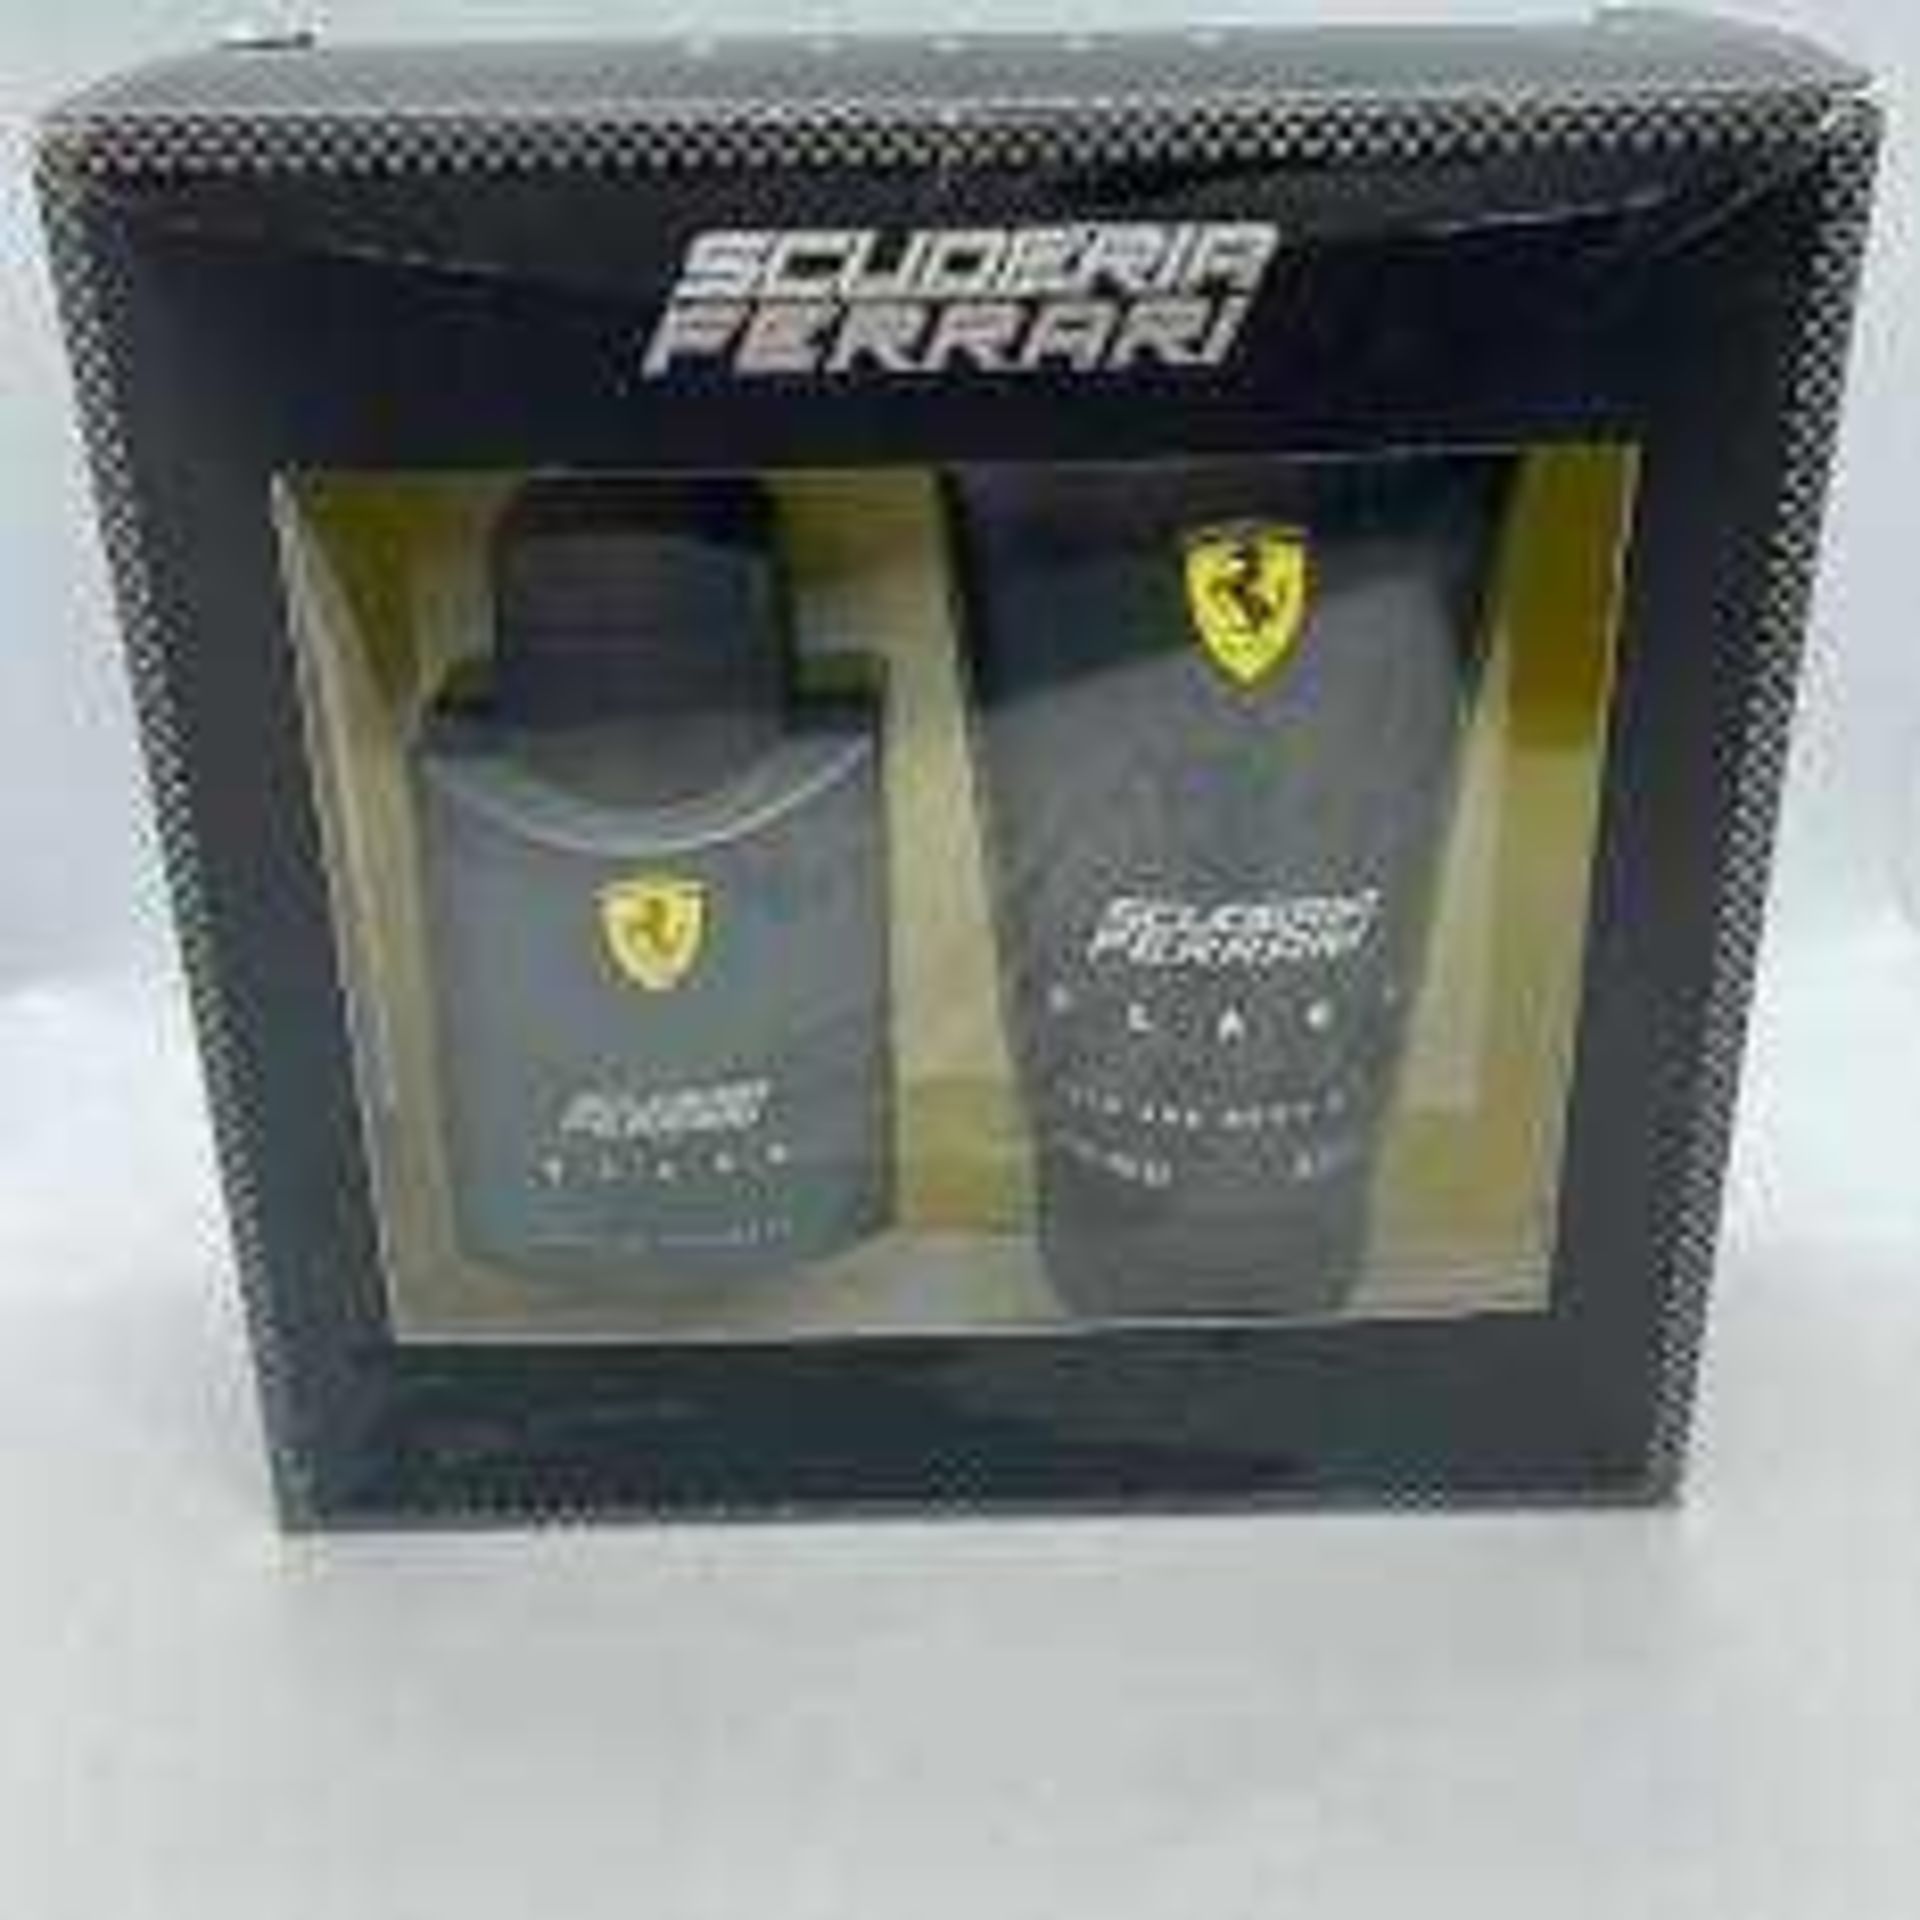 RRP £80 Combined Lot To Contain 2X Scuderia Ferrari Black For Him Gift Set